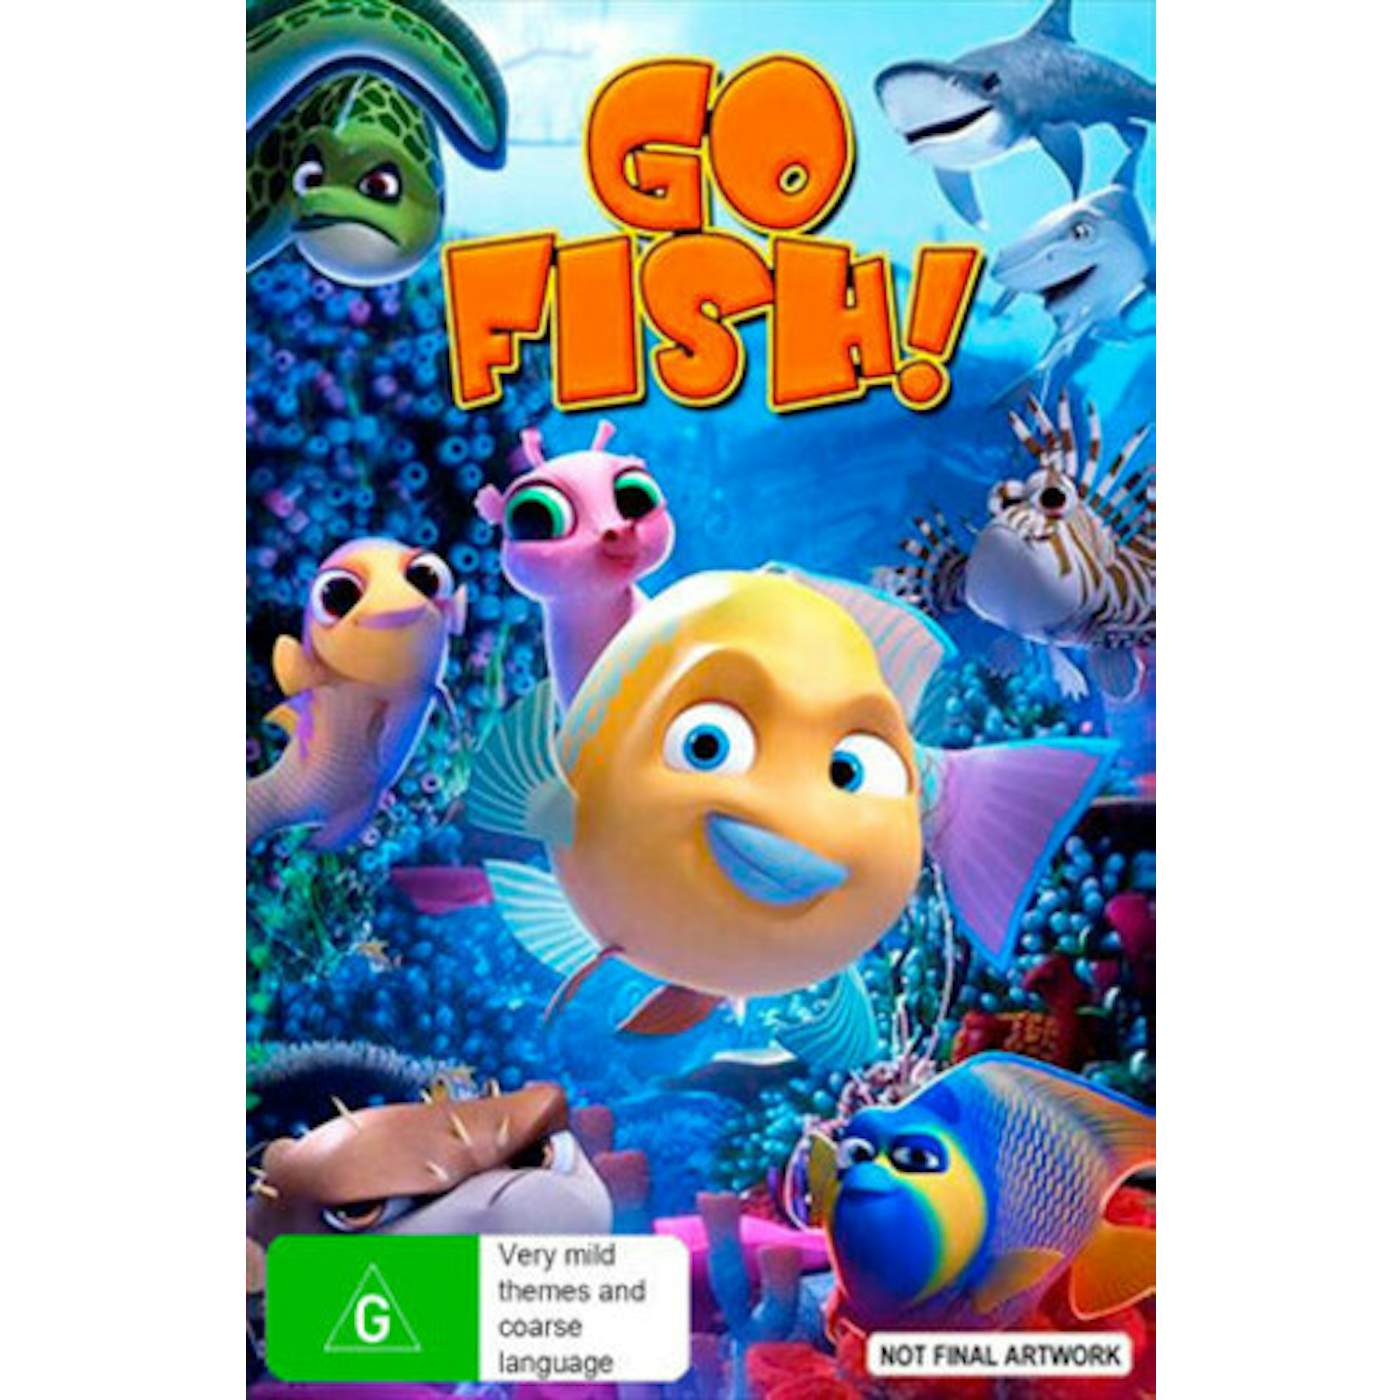 Go Fish Movie DVD - Animated Family Fun - Mama Likes This